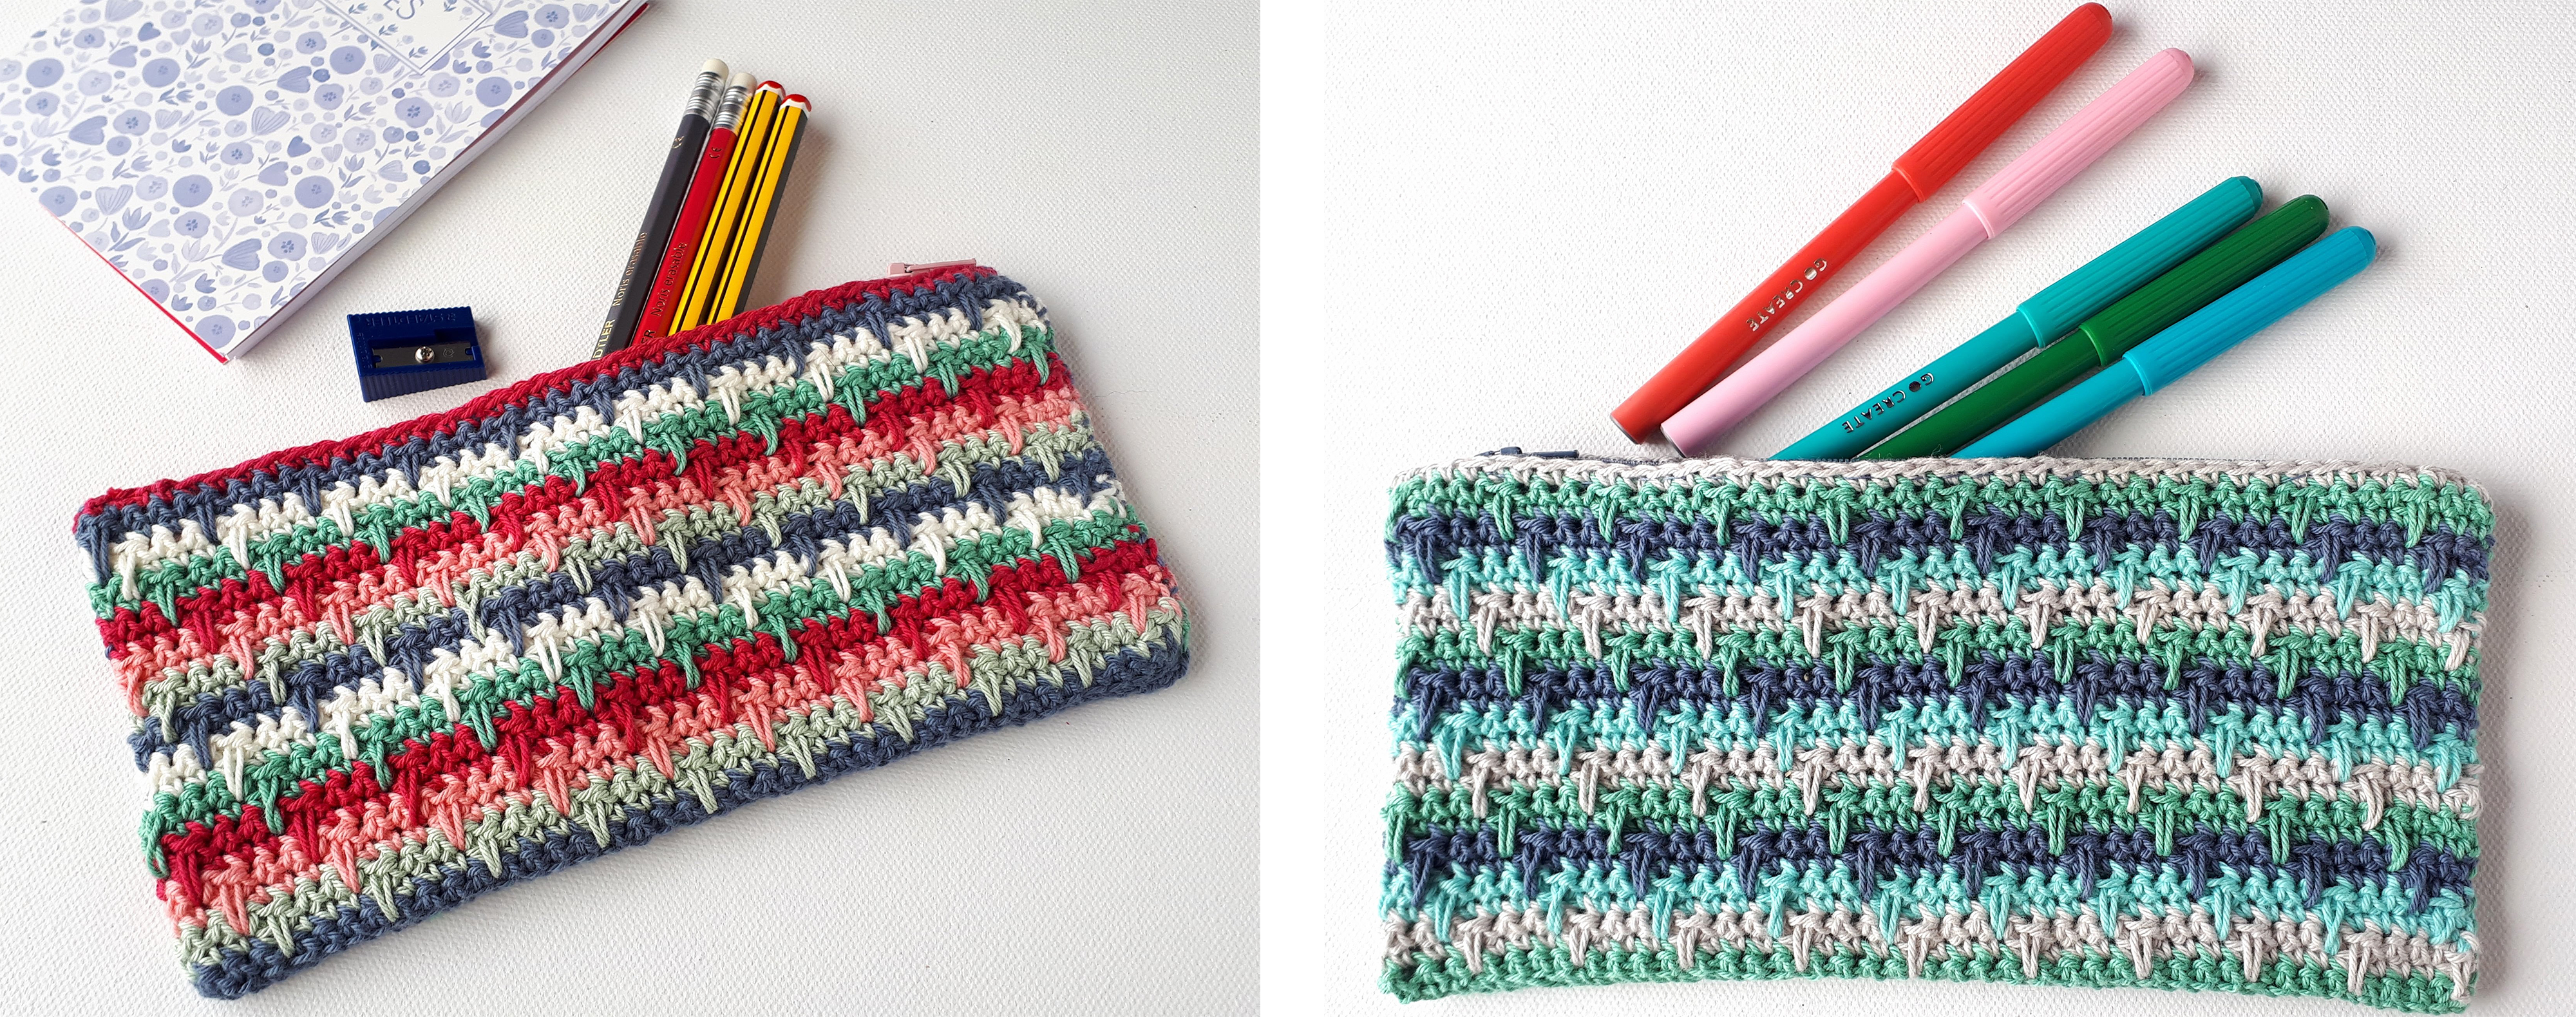 Crochet Pencil Case